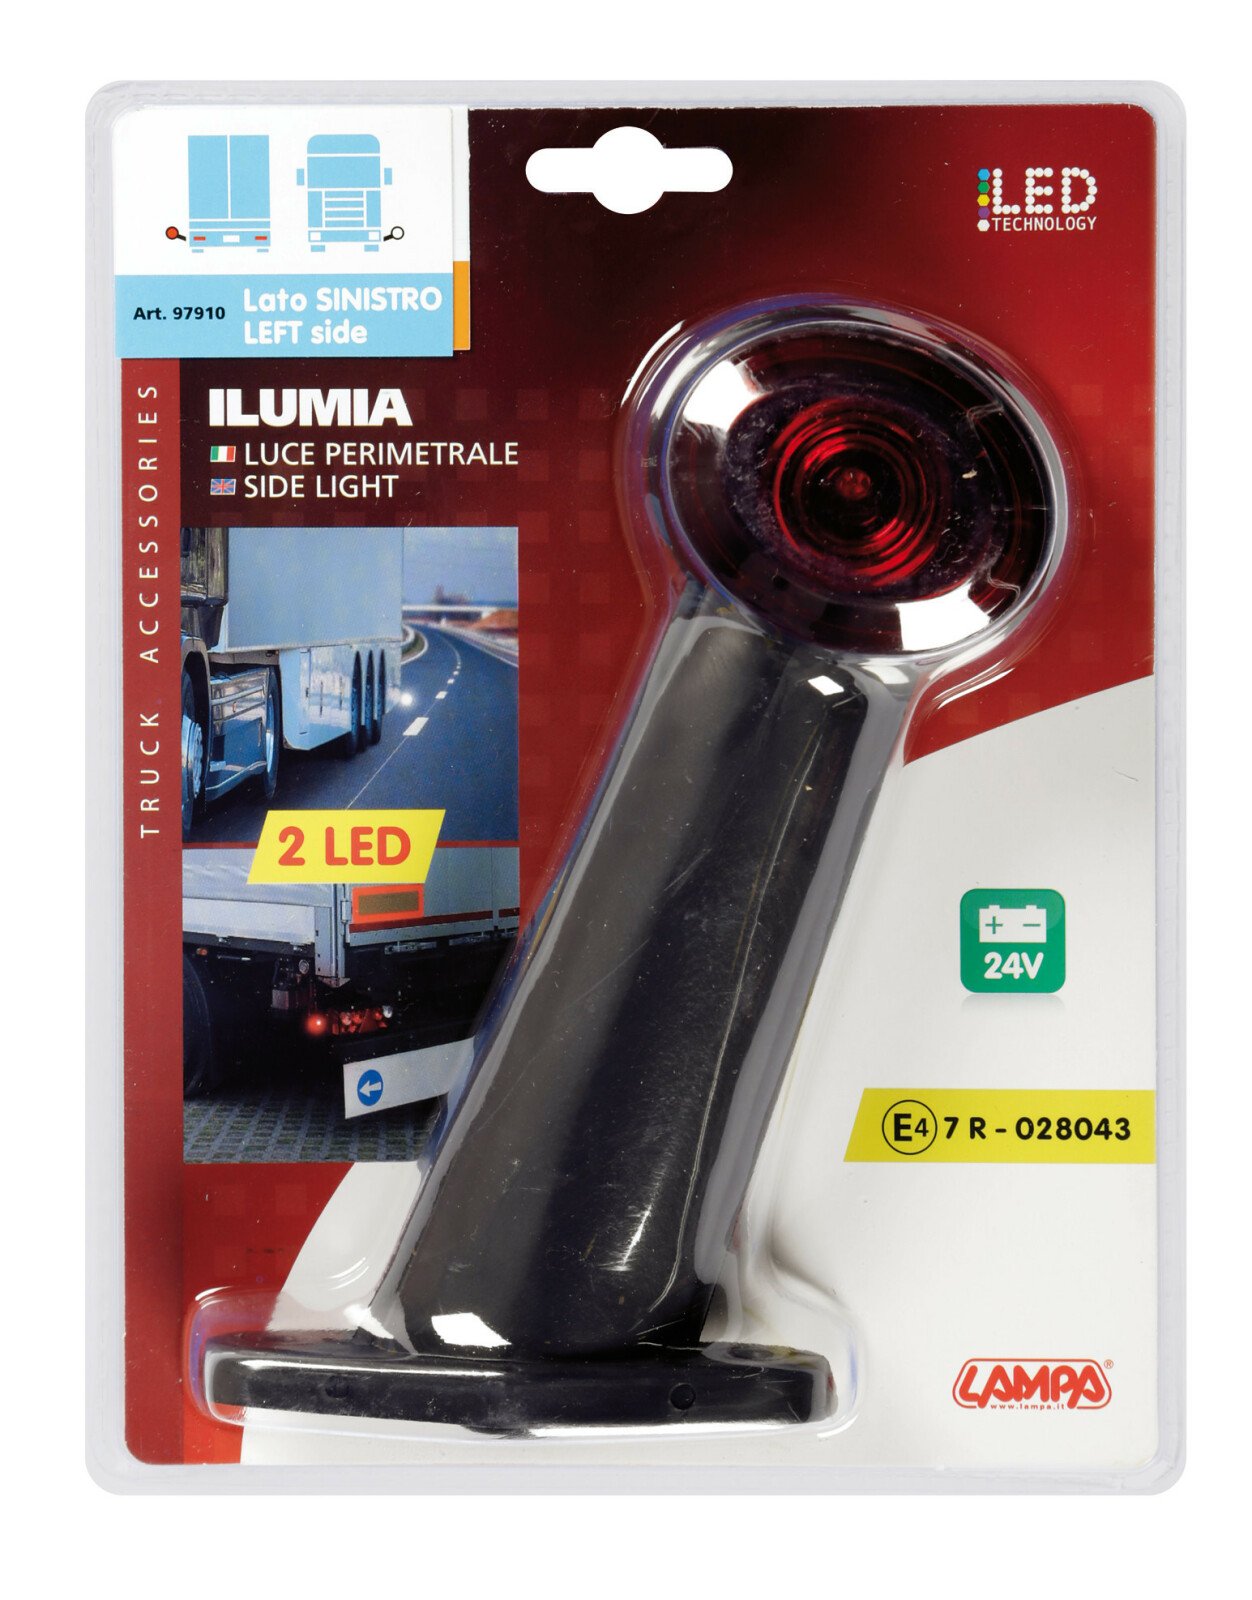 Ilumia, side light, 2 Led, 24V - 60° - Left thumb